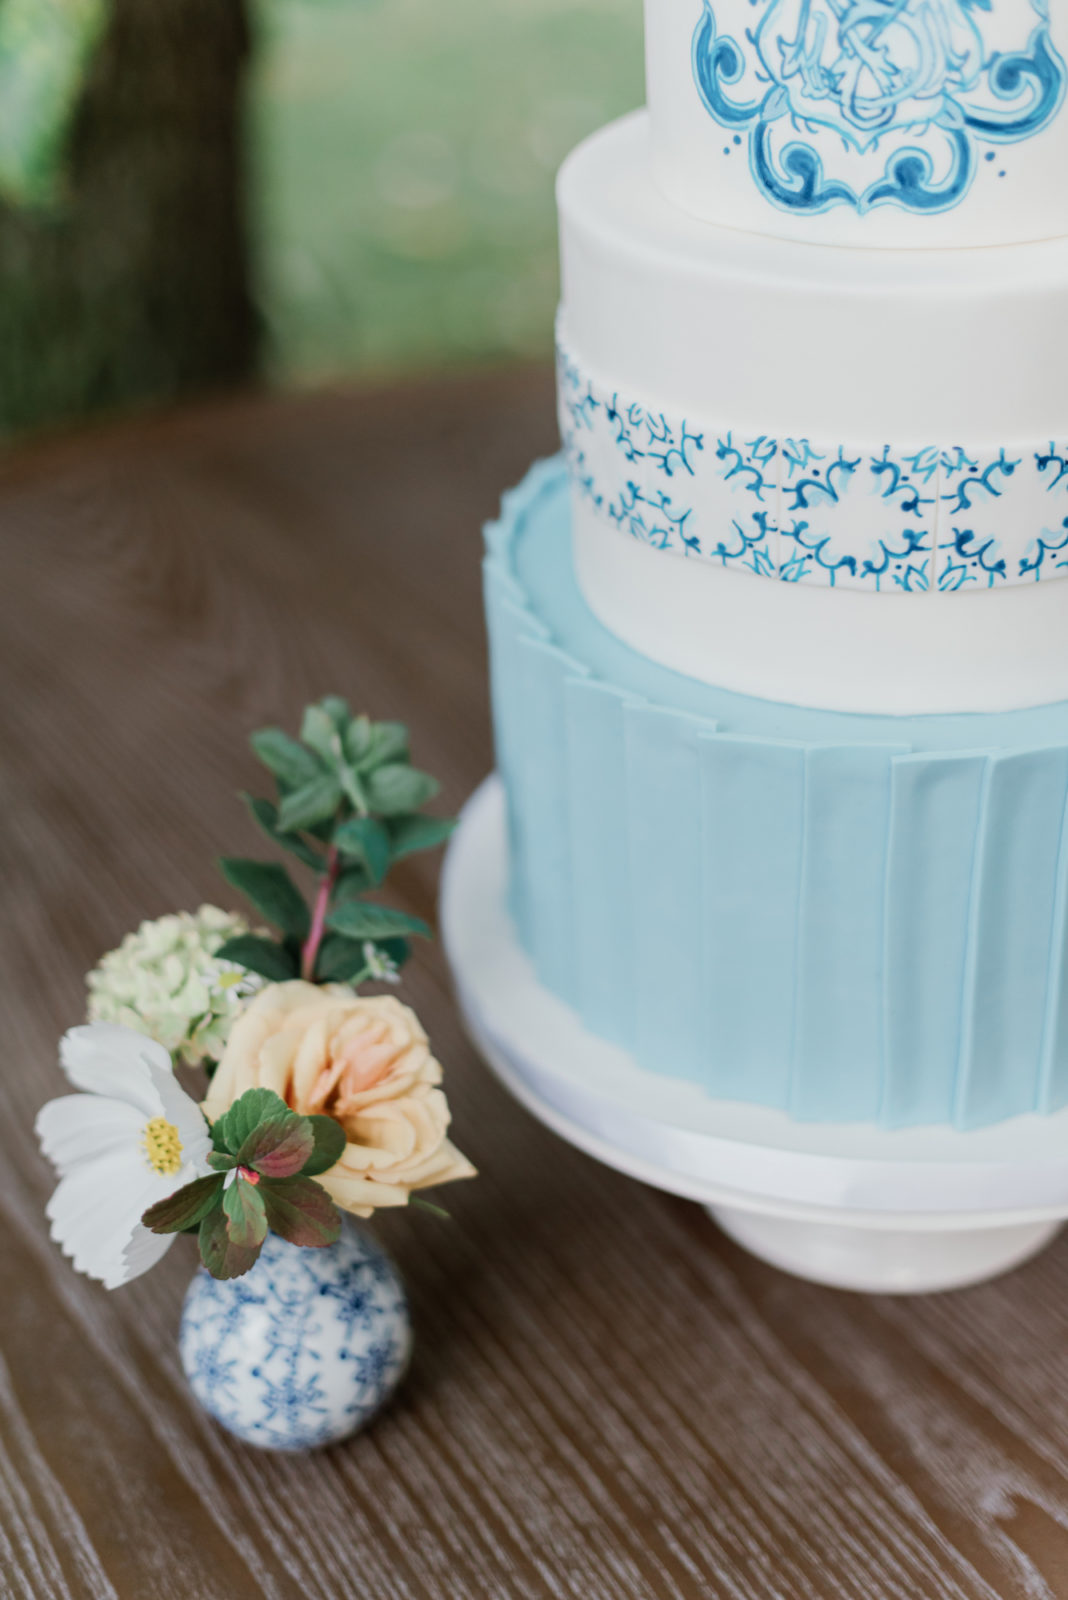 Portugal inspired wedding, white and blue wedding cake